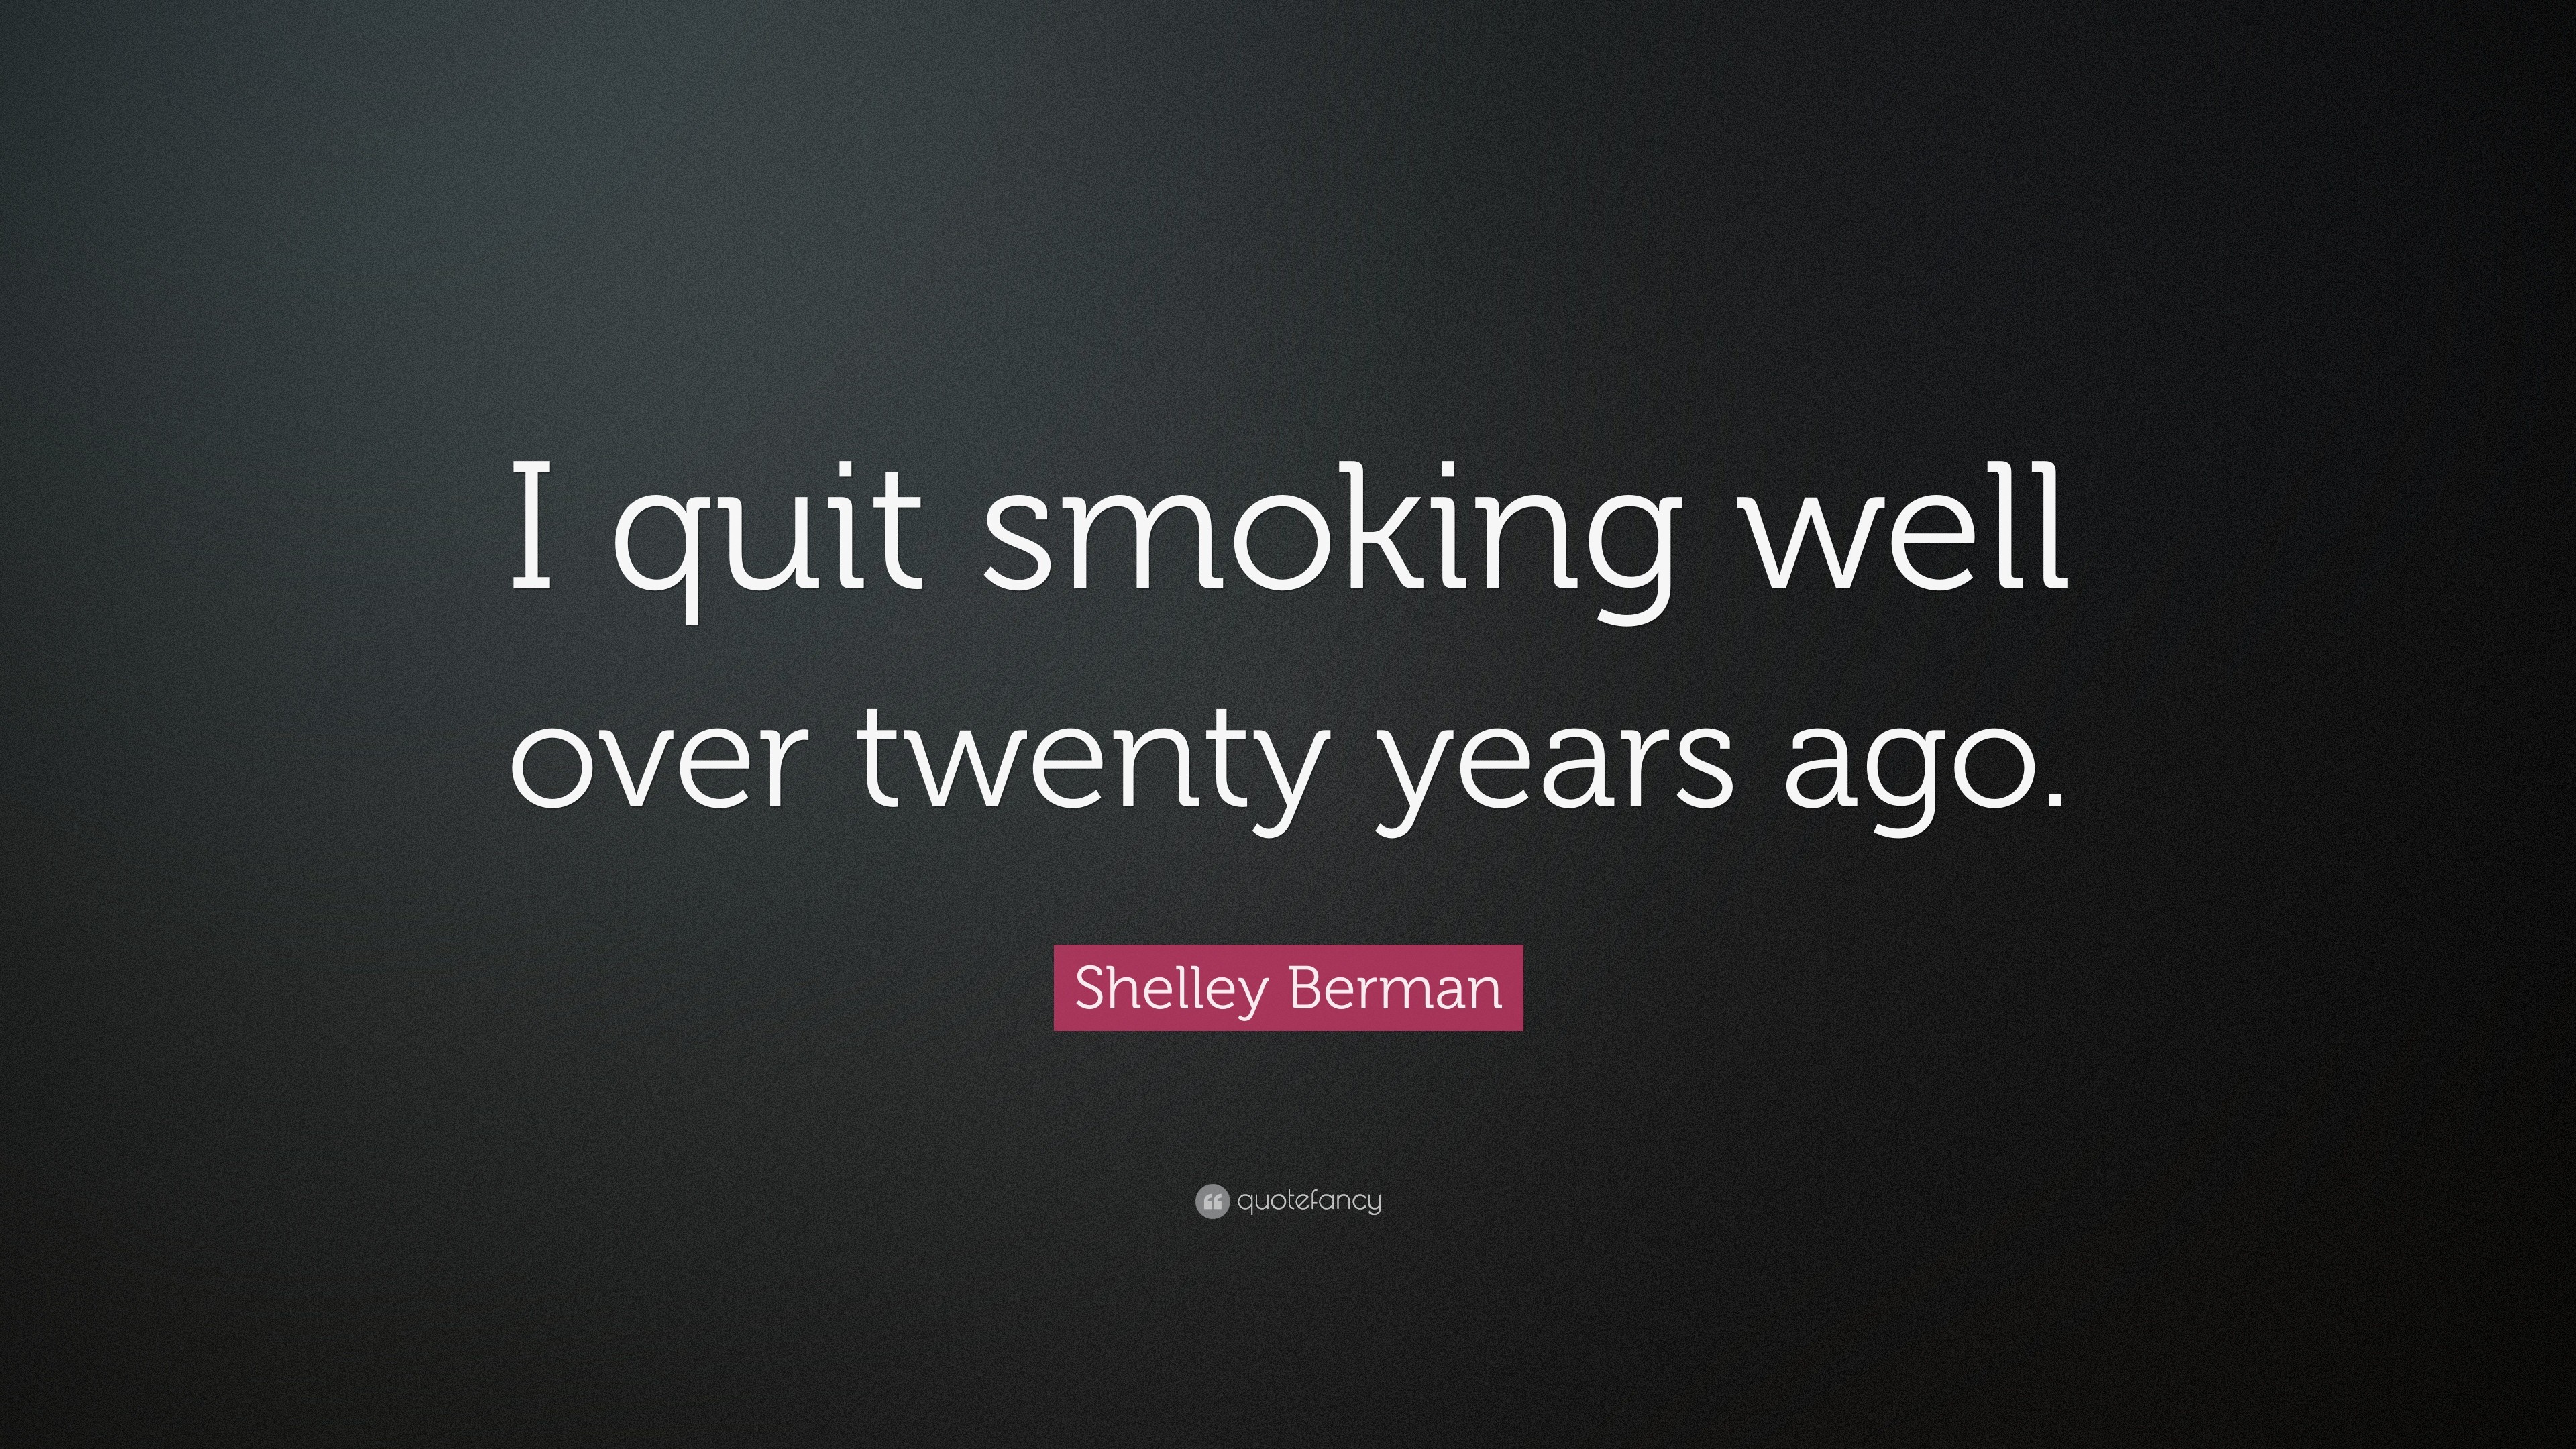 3840x2160 Shelley Berman Quote: “I quit smoking well over twenty years ago.”